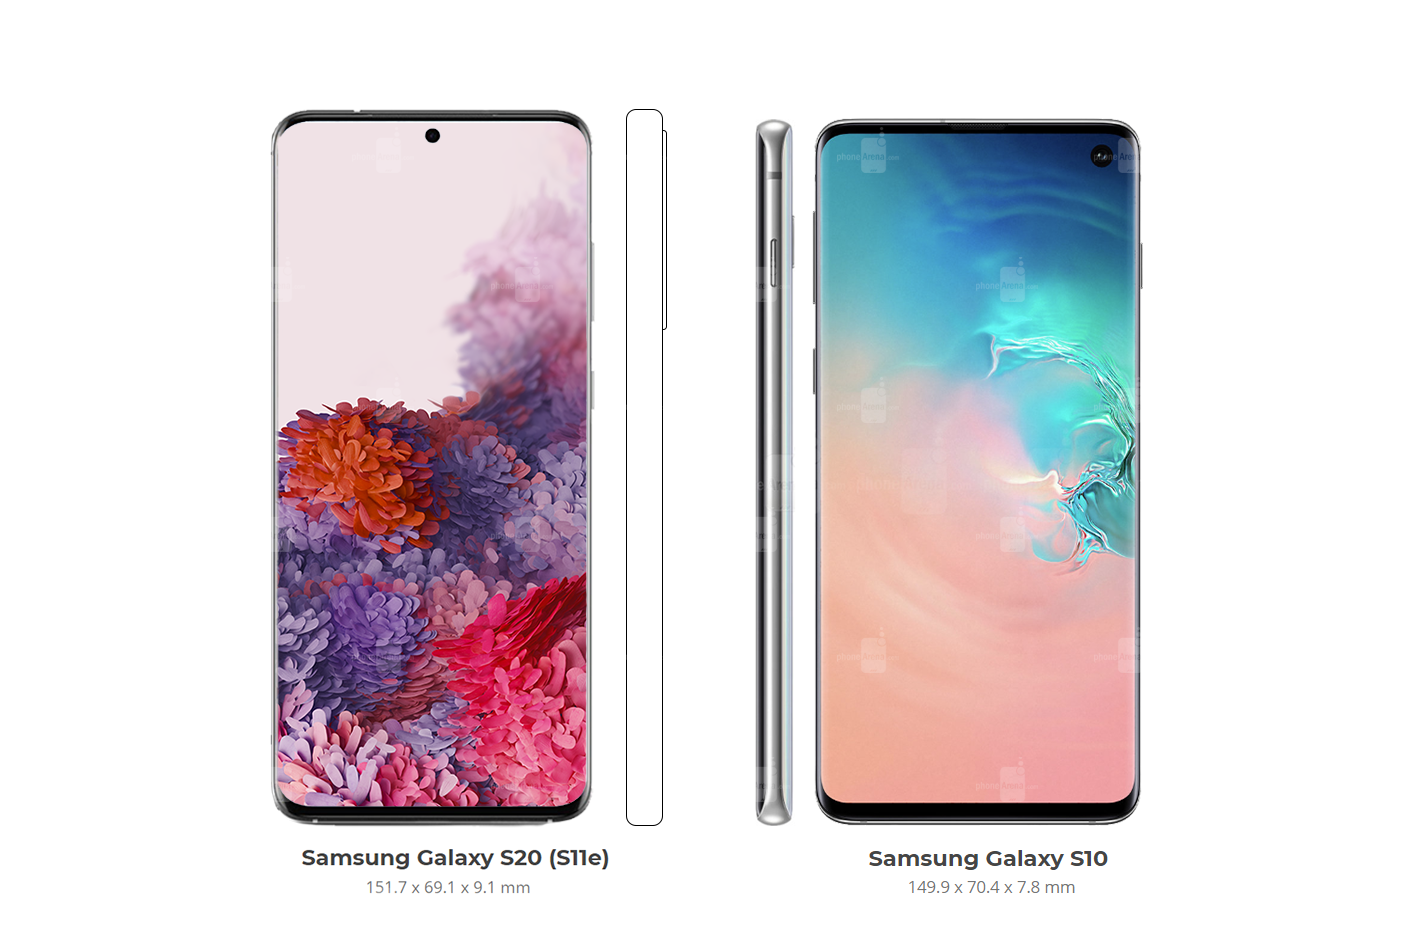 Galaxy s10 ultra. Samsung Galaxy s20 s10. Samsung Galaxy s10 Ultra. Samsung Galaxy s10 / s10 +. Samsung Galaxy Note 10 vs Galaxy s20.